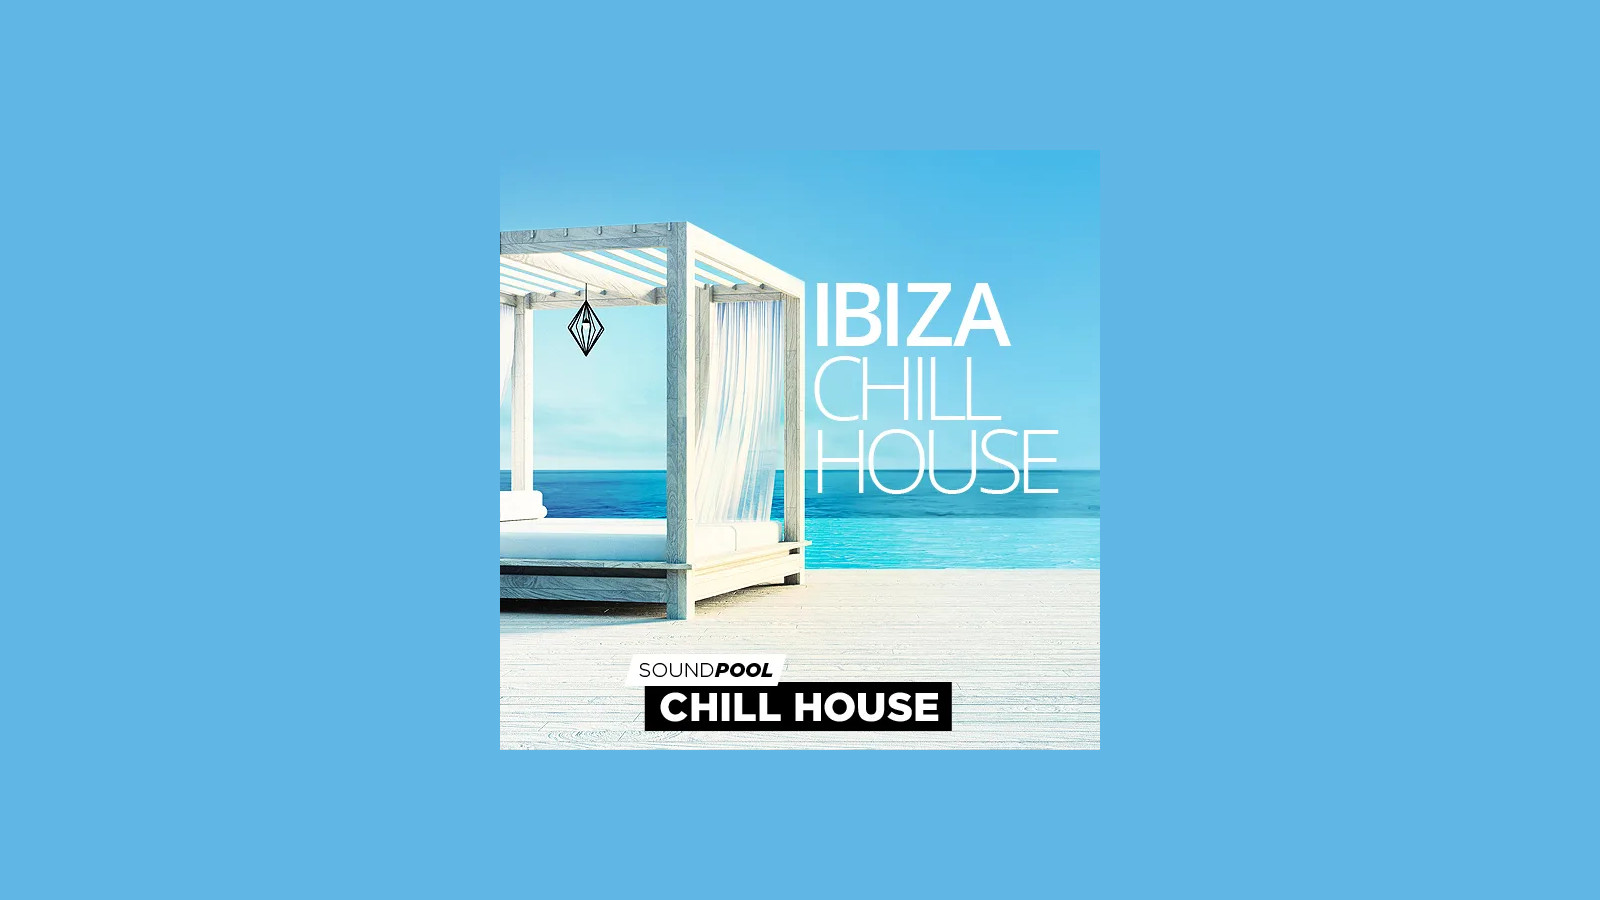 MAGIX Soundpool Ibiza Chill House ProducerPlanet CD Key $5.65